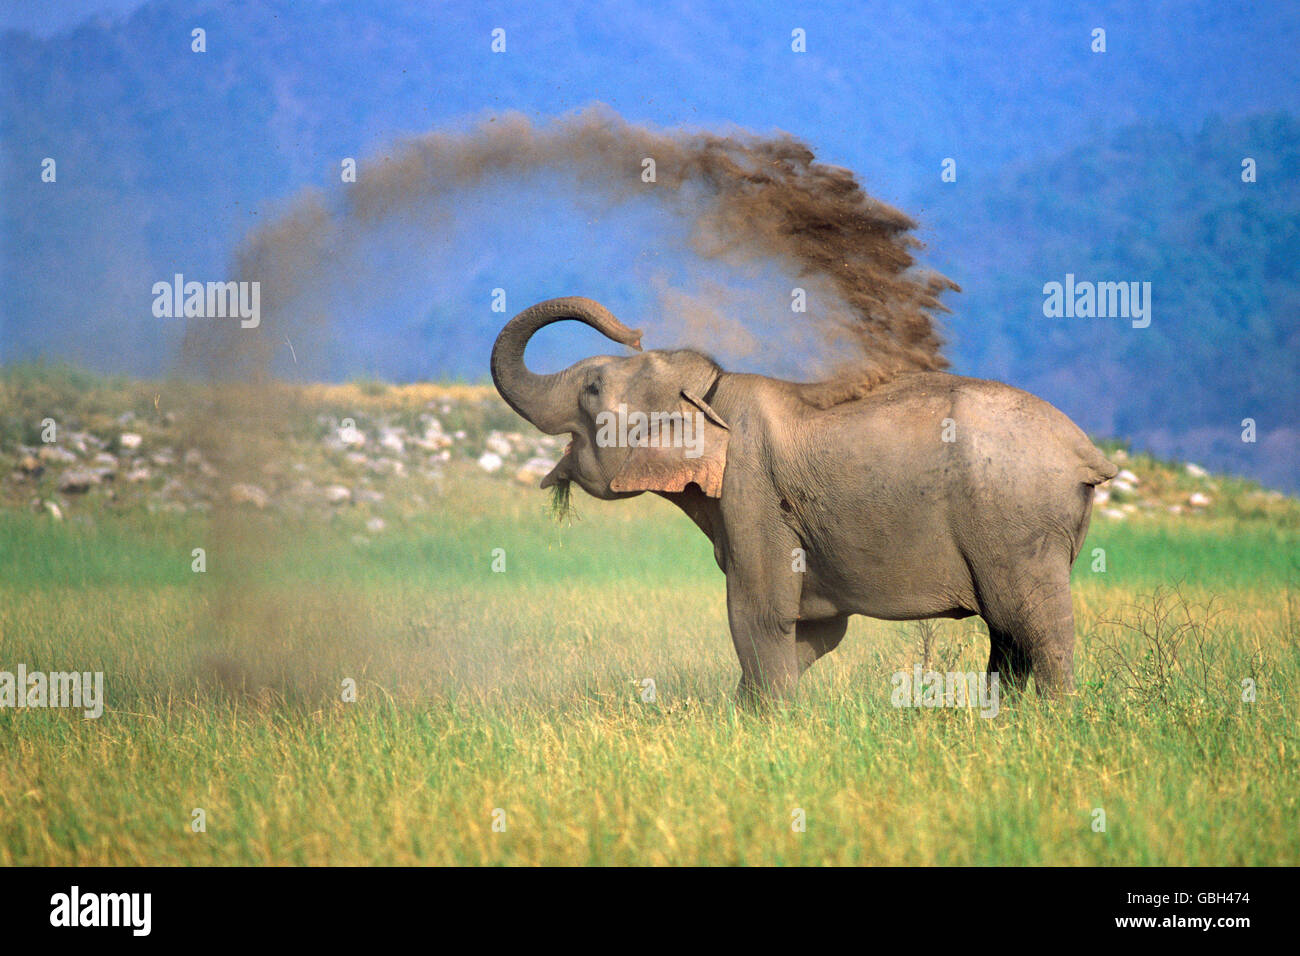 The image Elephant mudbath  ( Elephas maximus) in Corbett India Stock Photo